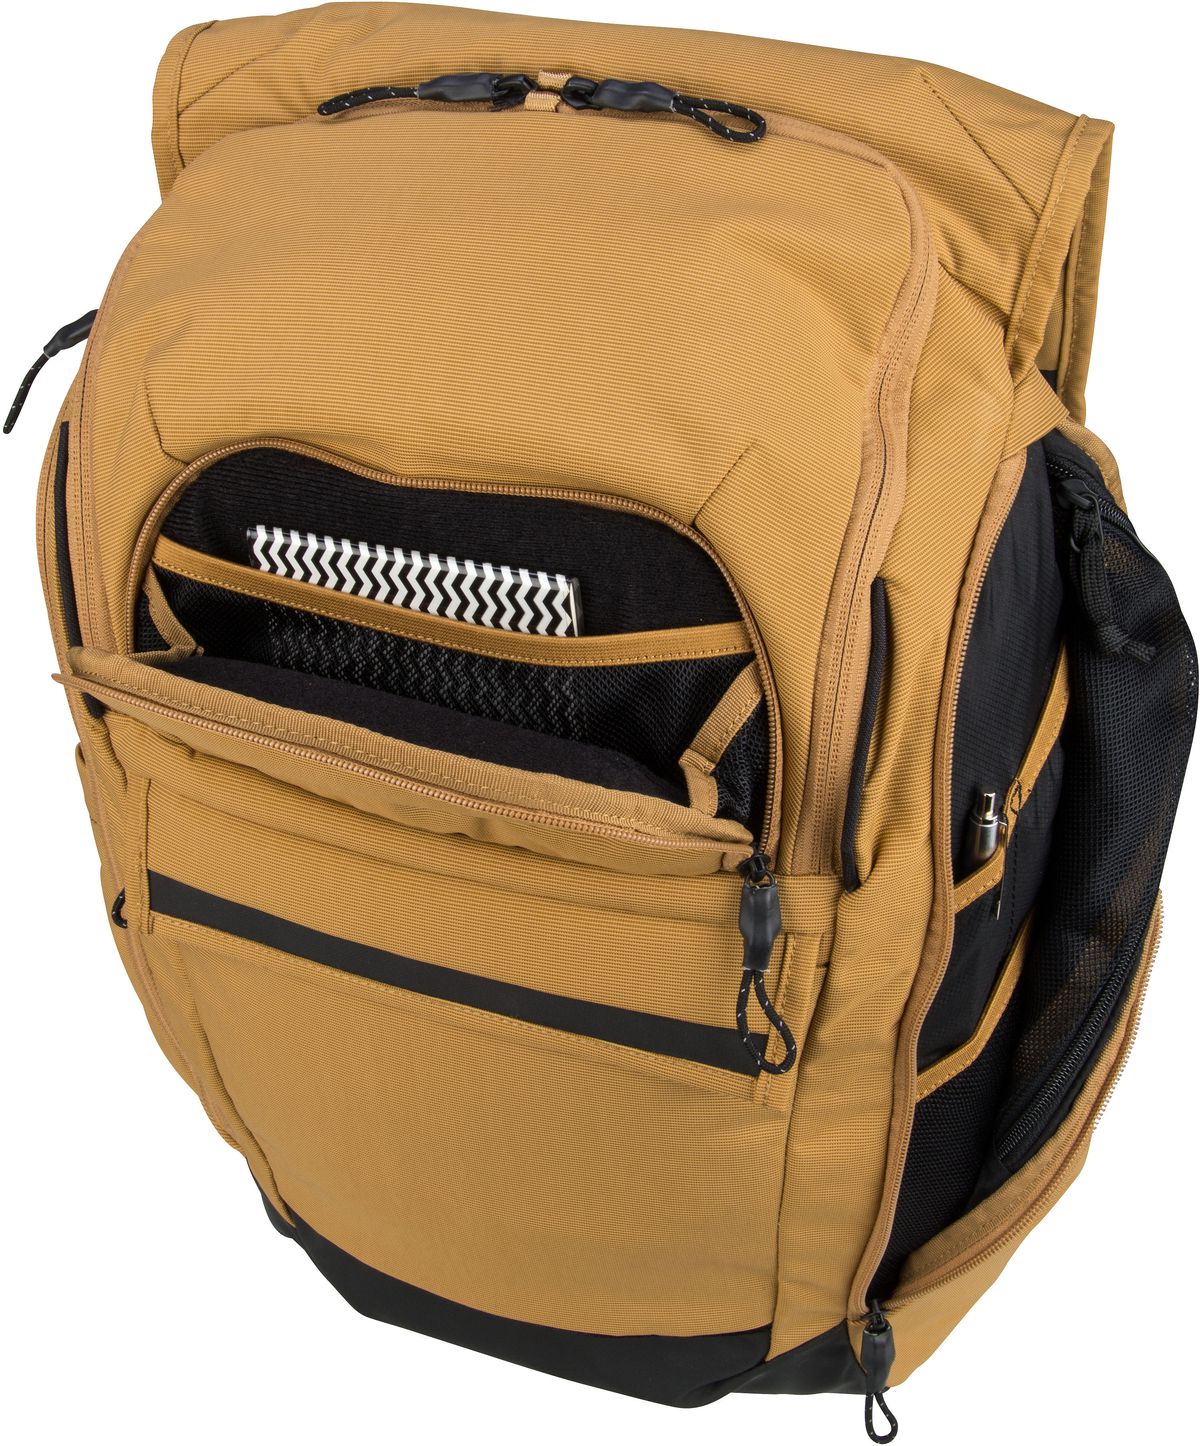 Thule Paramount Backpack 27L - Woodthrush